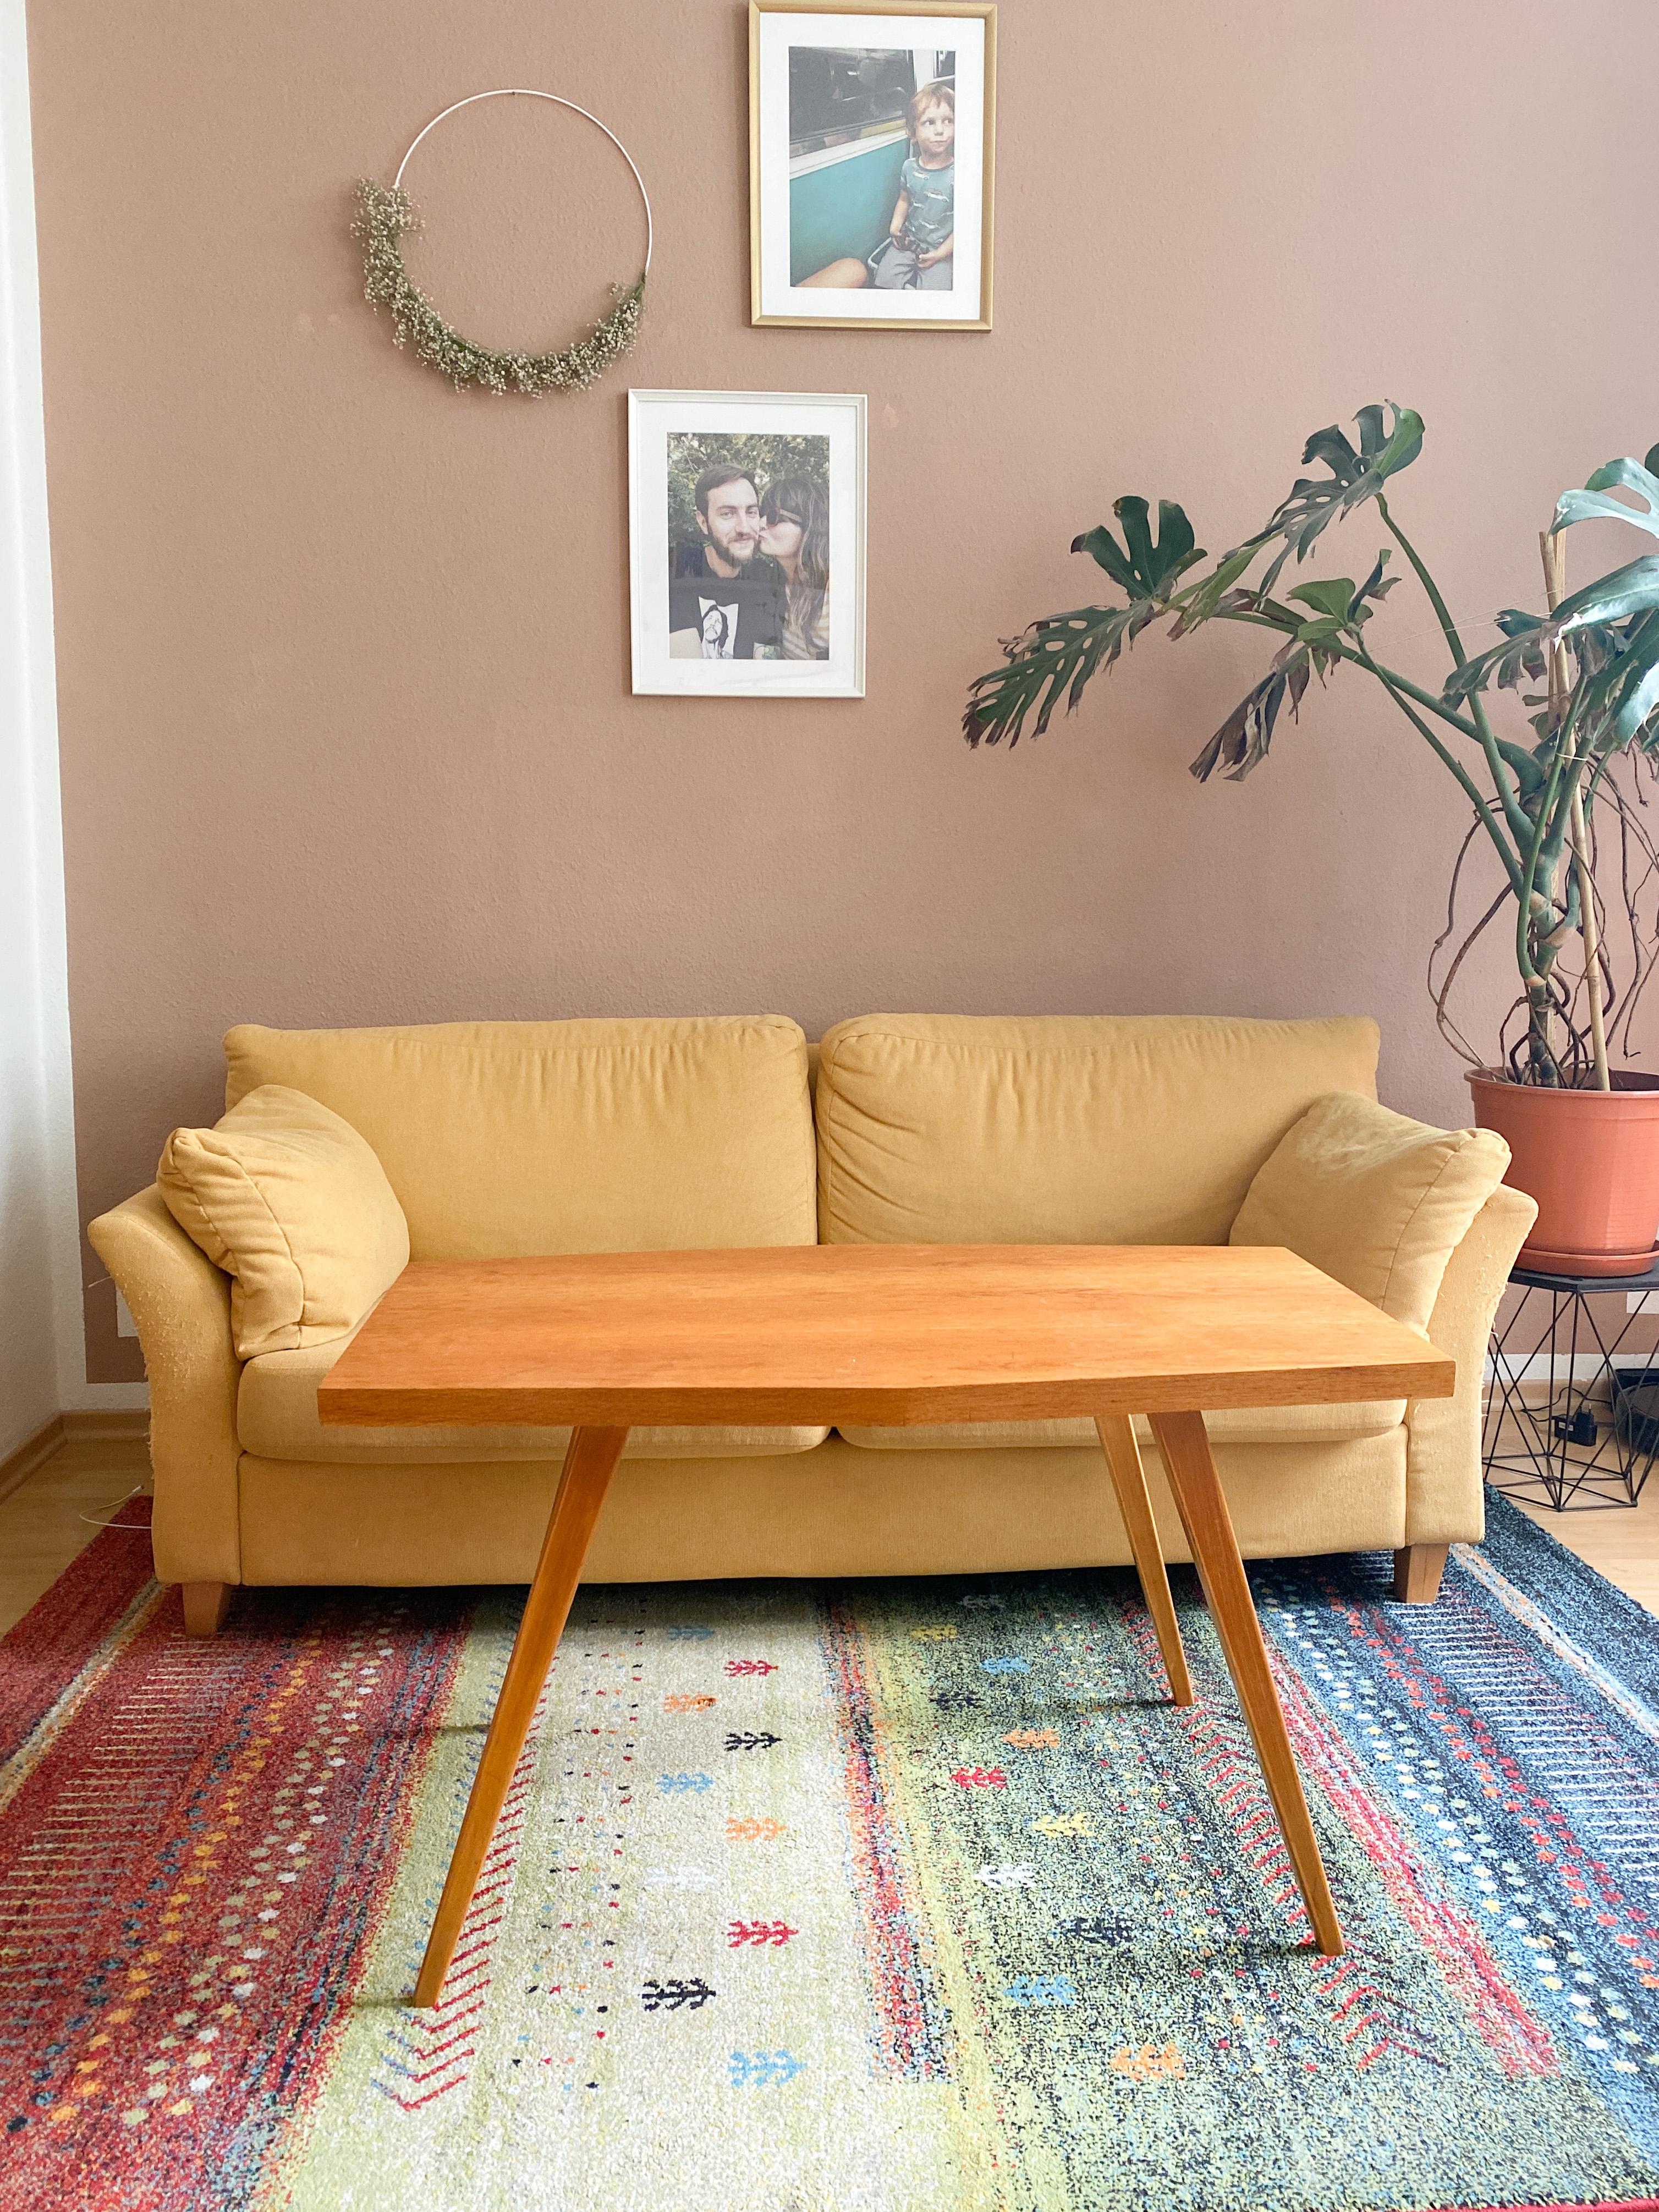 Lieblingsplatz
#sofa #monstera #livingroom